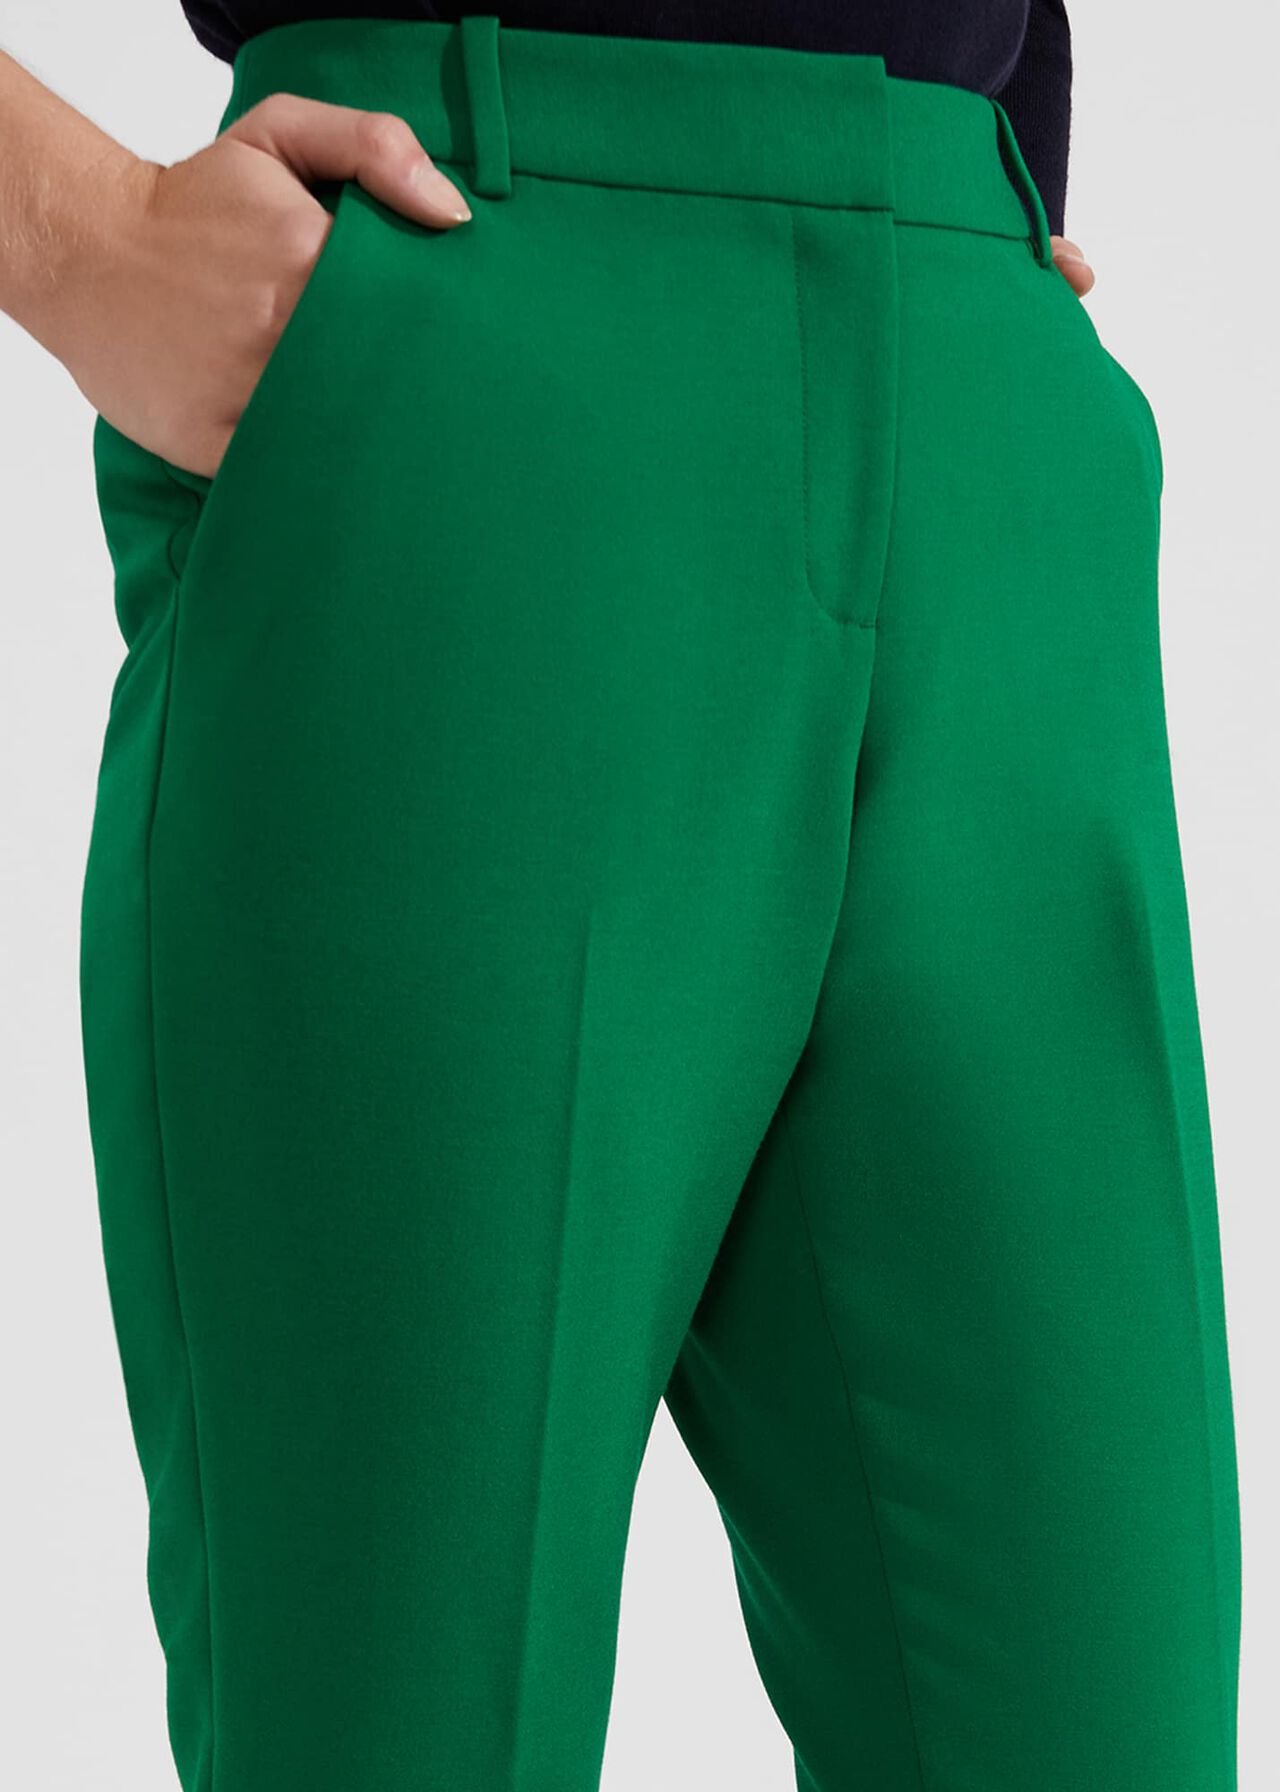 Petite Suki Pants, Malachite Green, hi-res